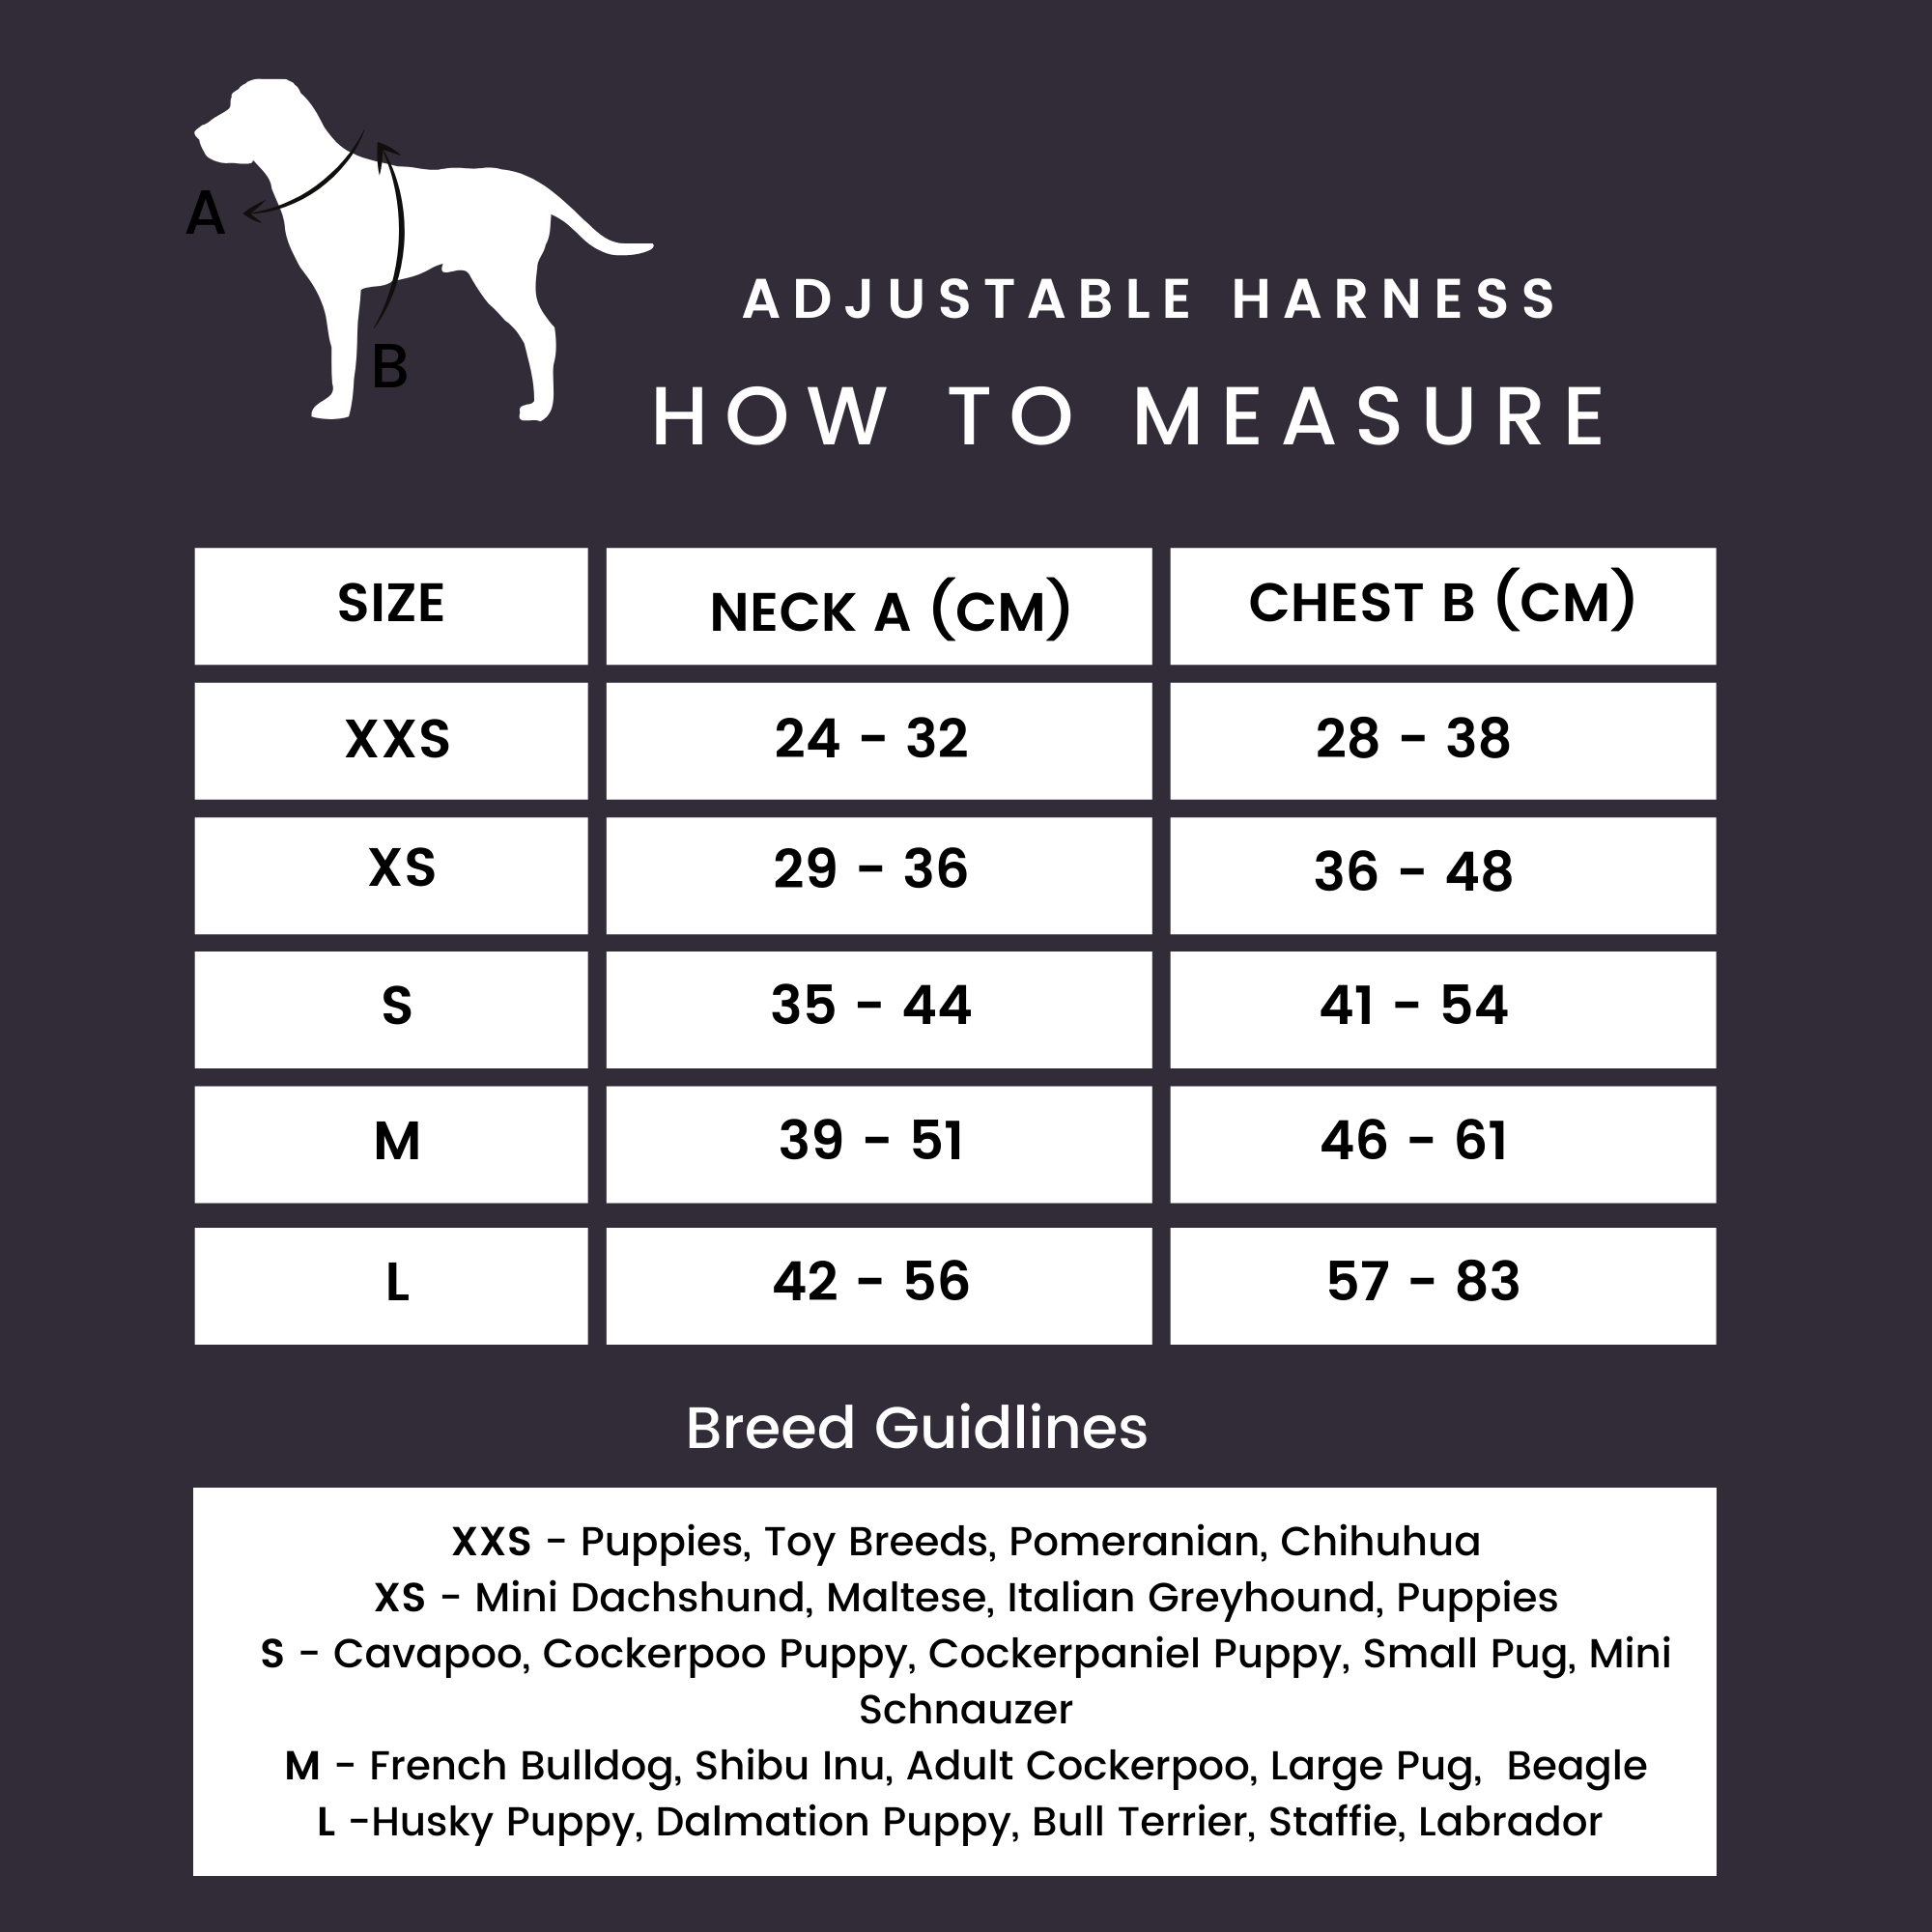 Midnight Leopard Black Adjustable Dog Harness